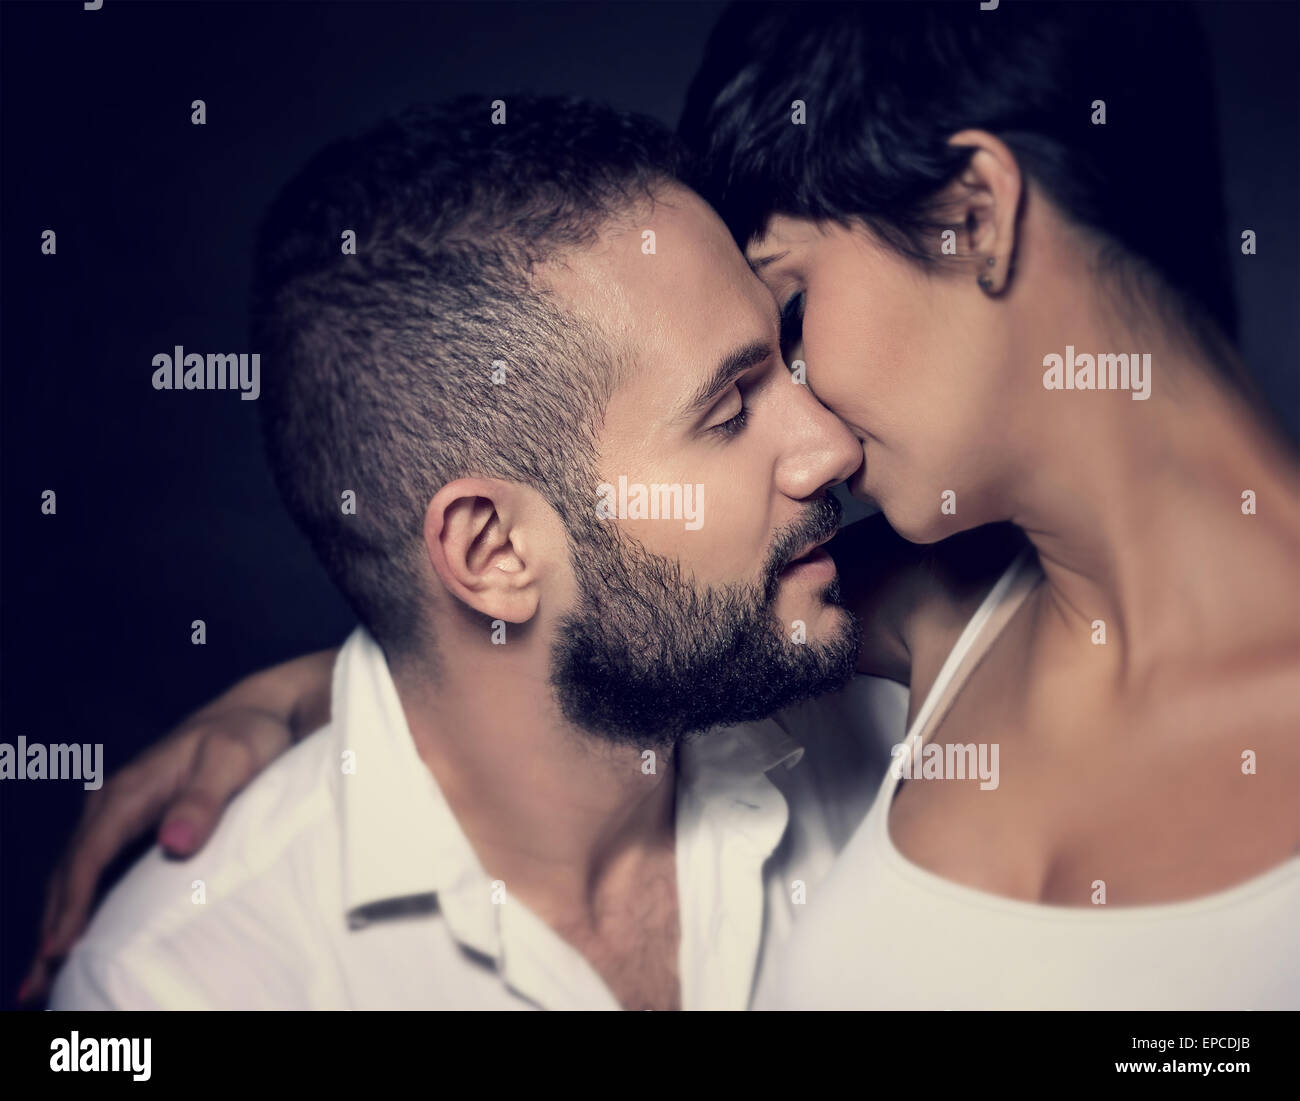 Closeup portrait of gentle loving couple kissing isolated on black background, enjoying romantic relationship Stock Photo